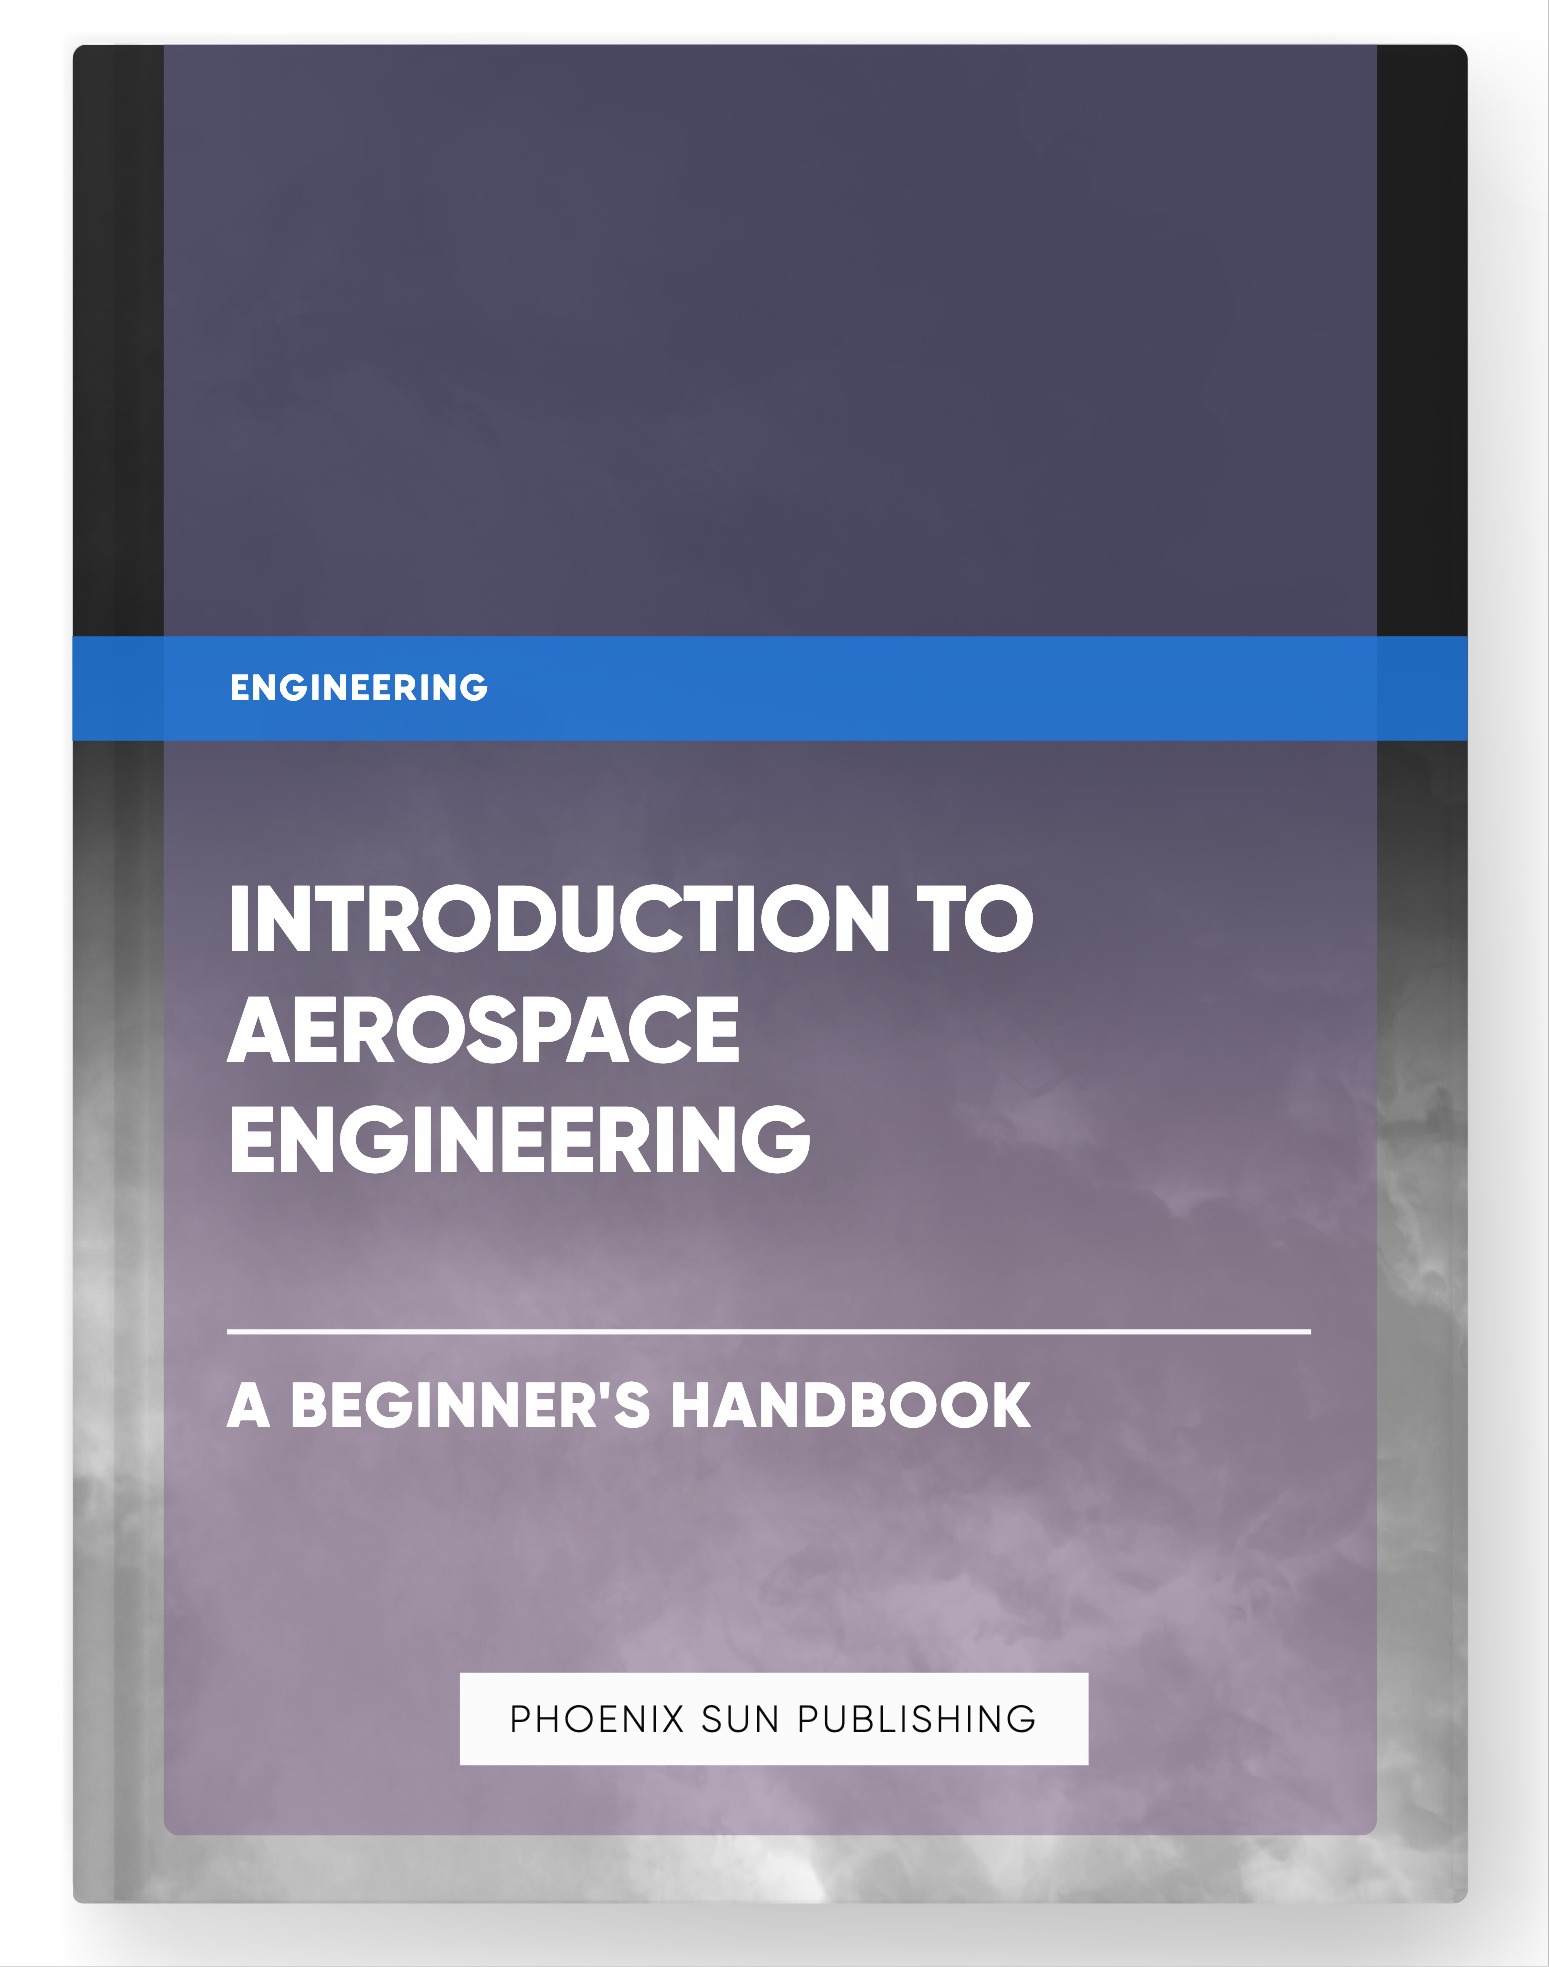 Introduction to Aerospace Engineering – A Beginner’s Handbook